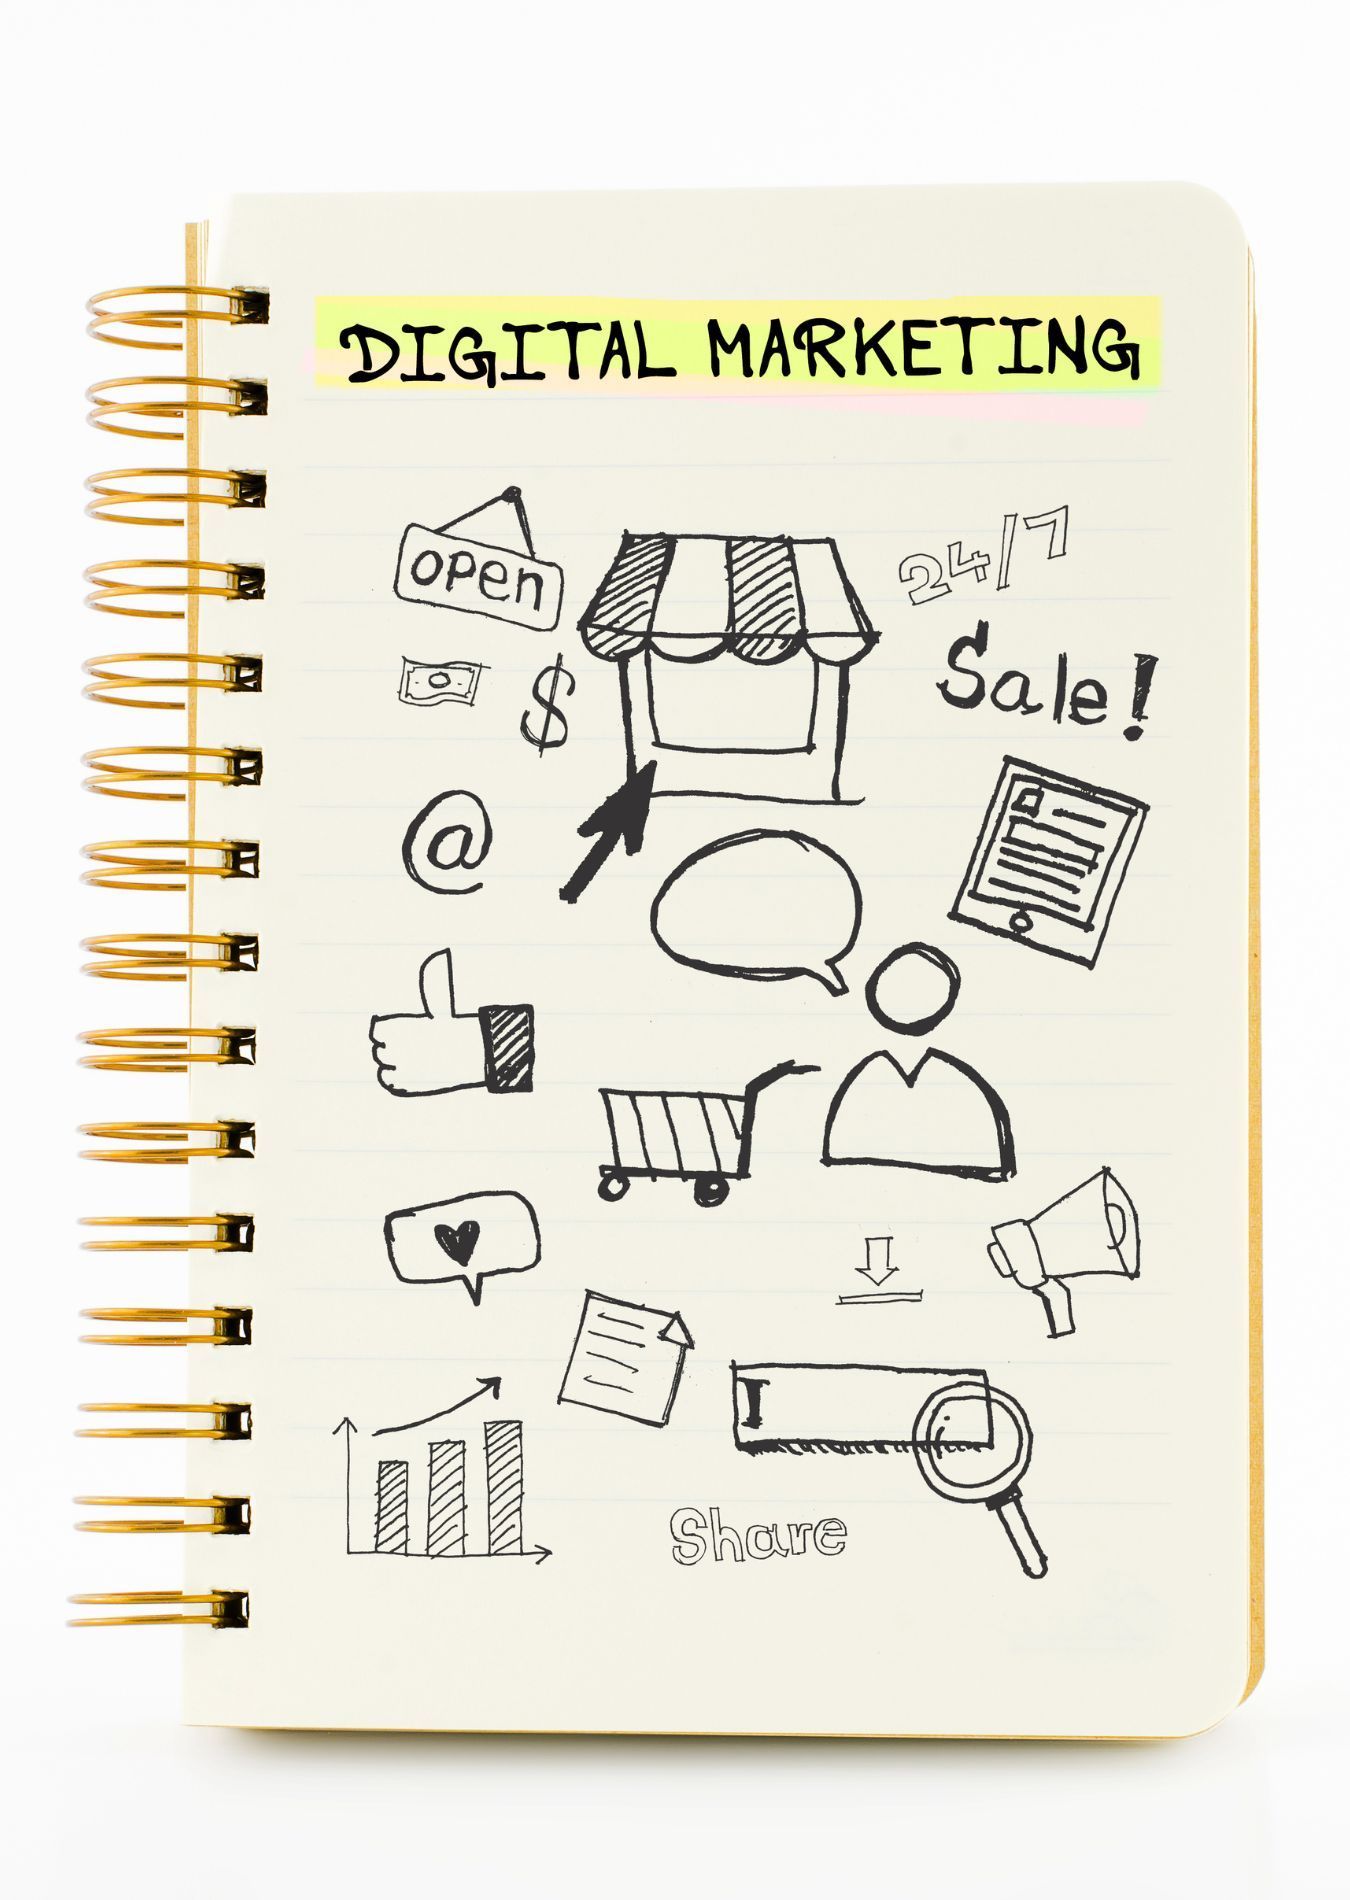 Nashville, TN digital marketing company plan